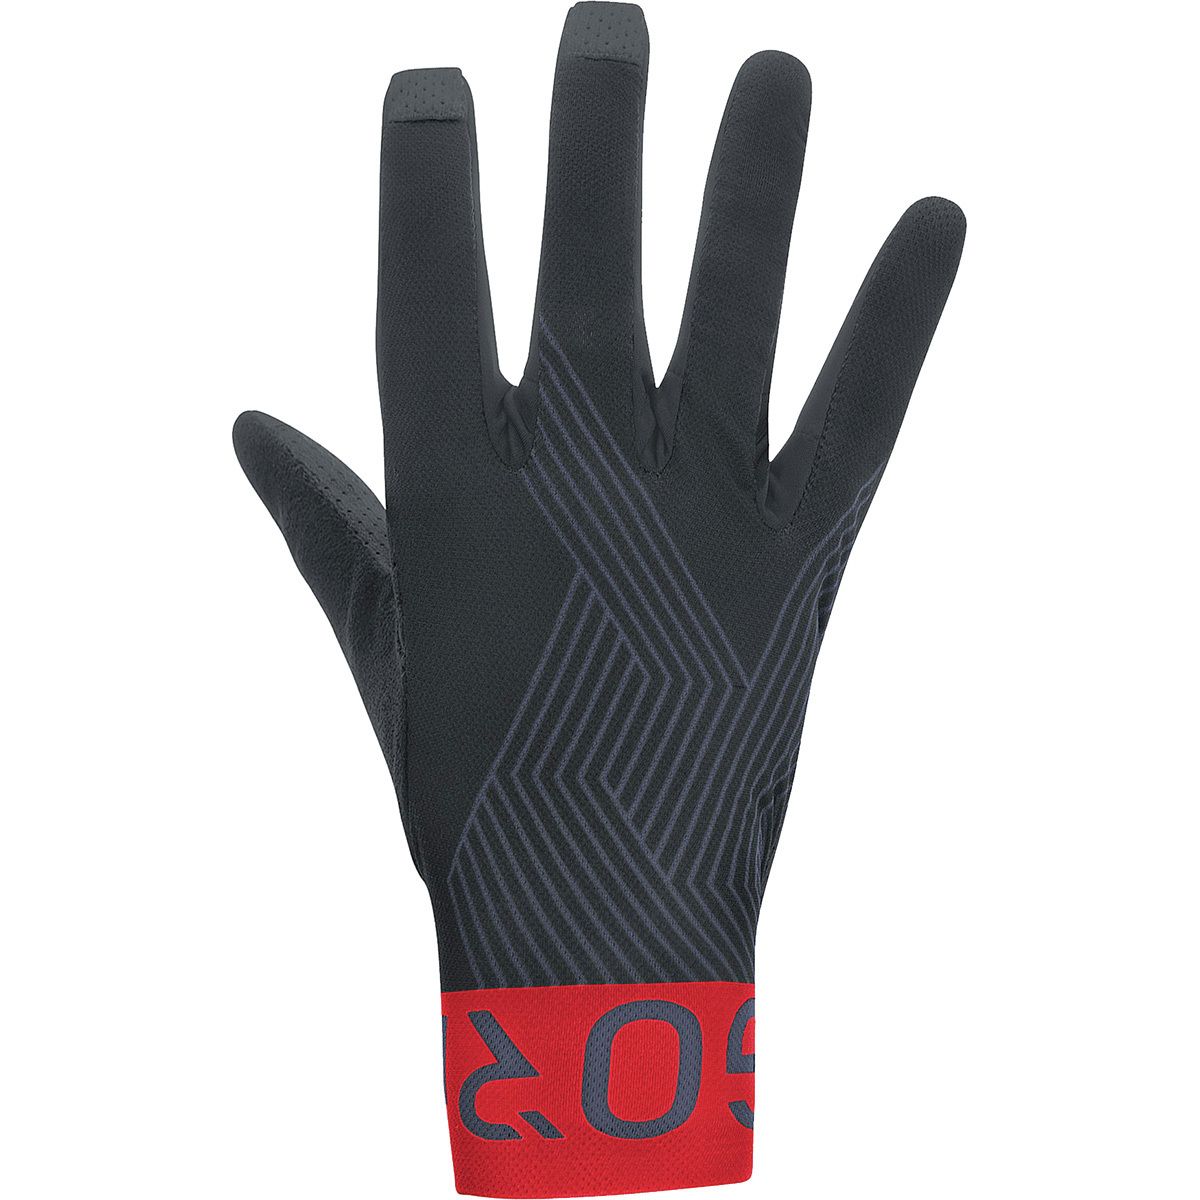 Gore Wear C7 Pro Glove - Men's